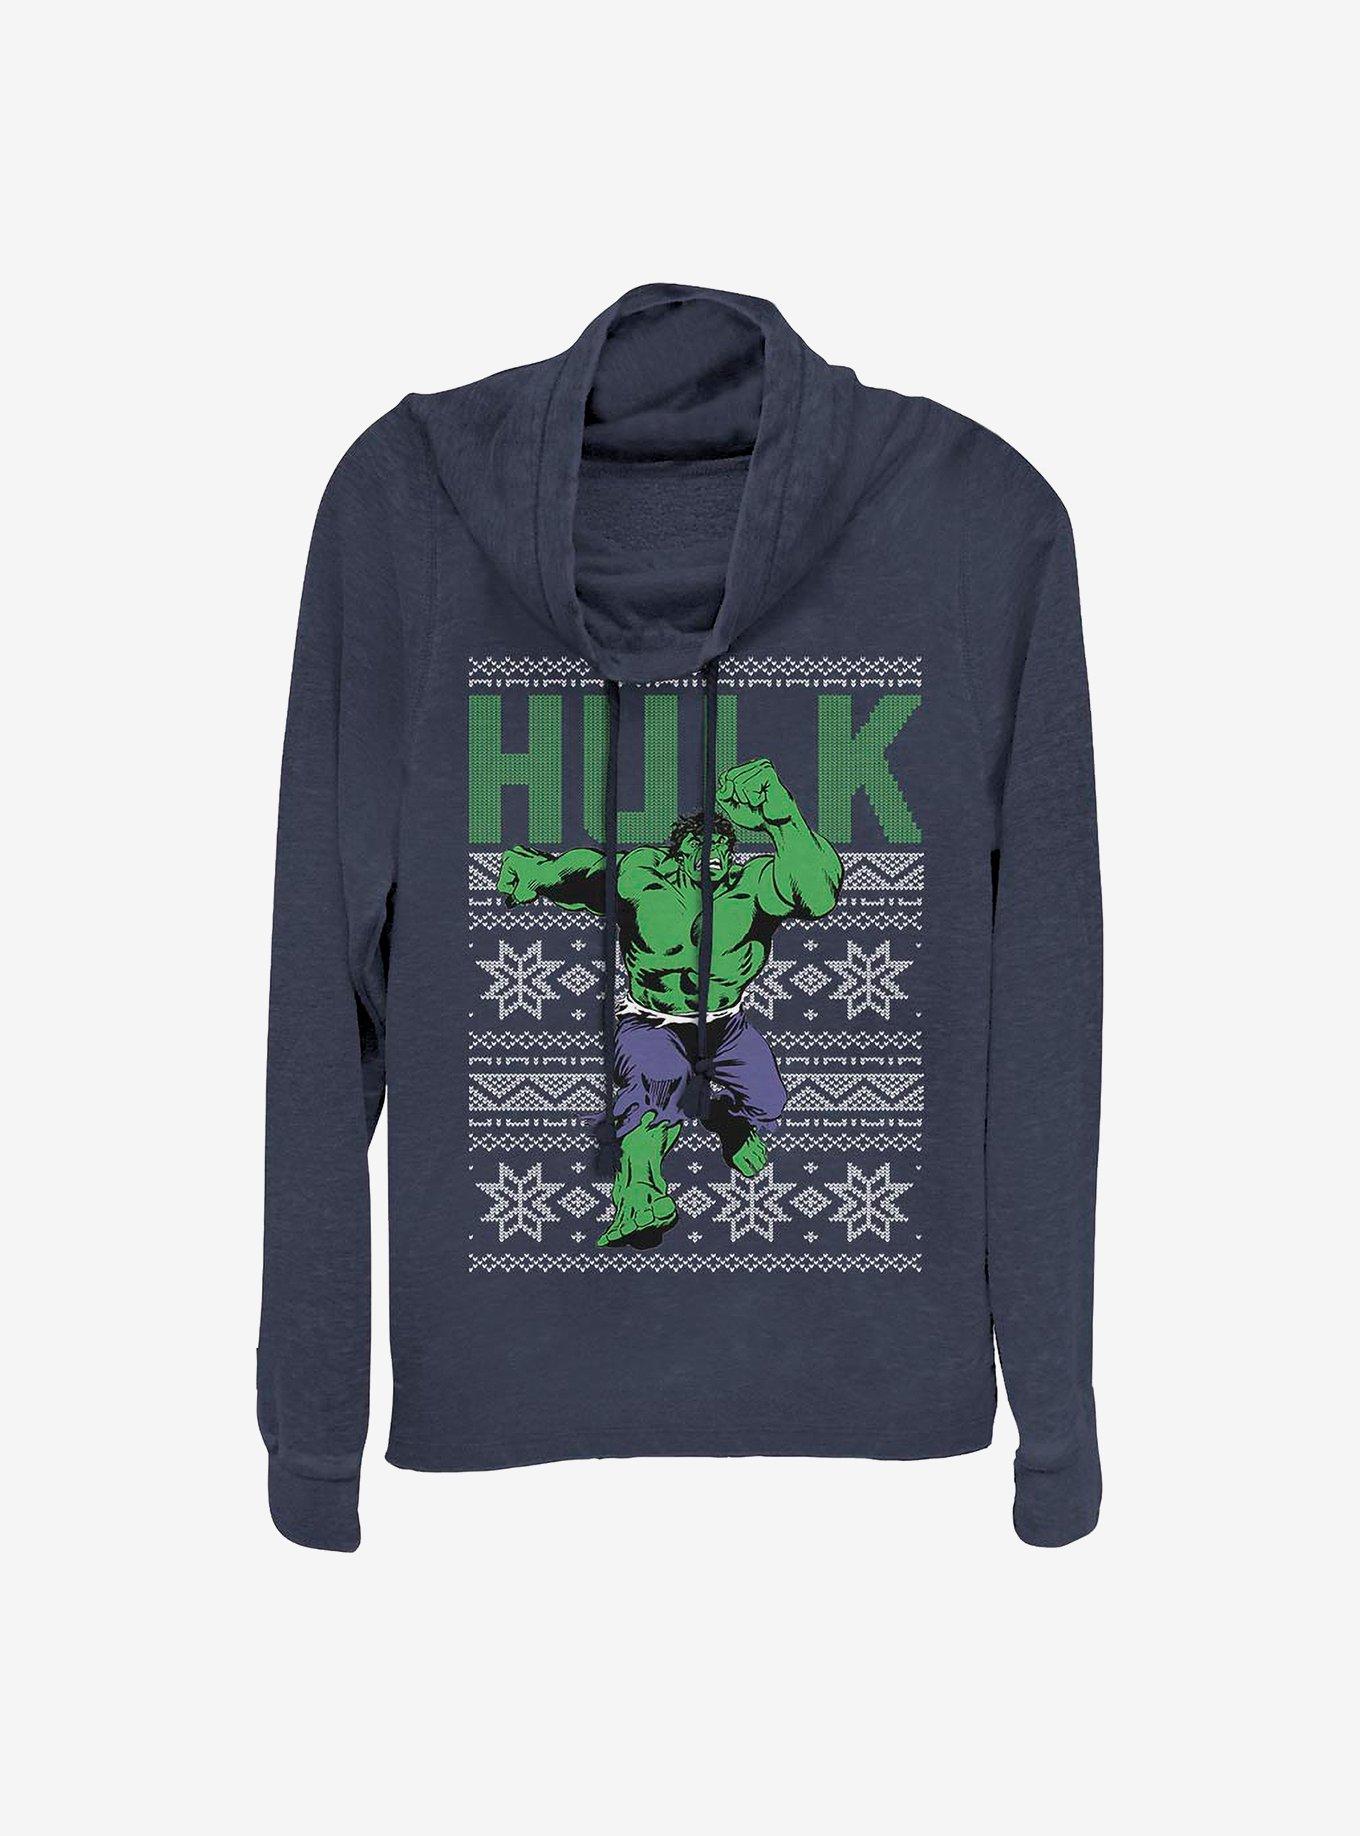 Marvel Hulk Ugly Christmas Sweater Cowl Neck Long-Sleeve Girls Top, NAVY, hi-res